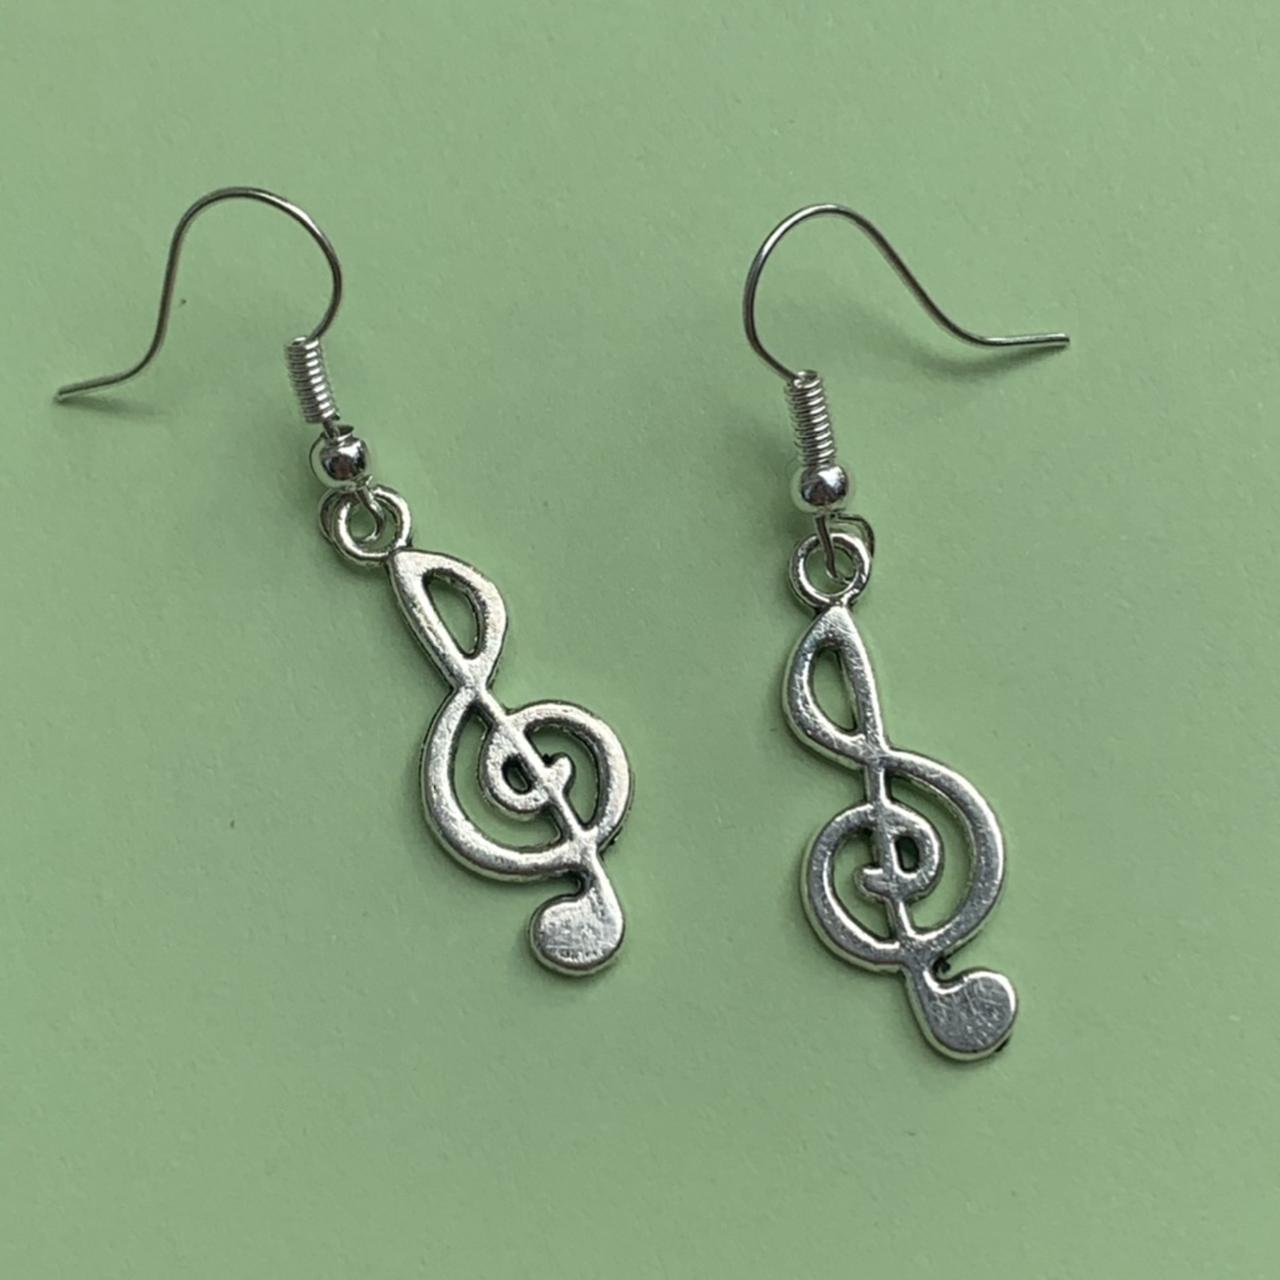 The music earrings